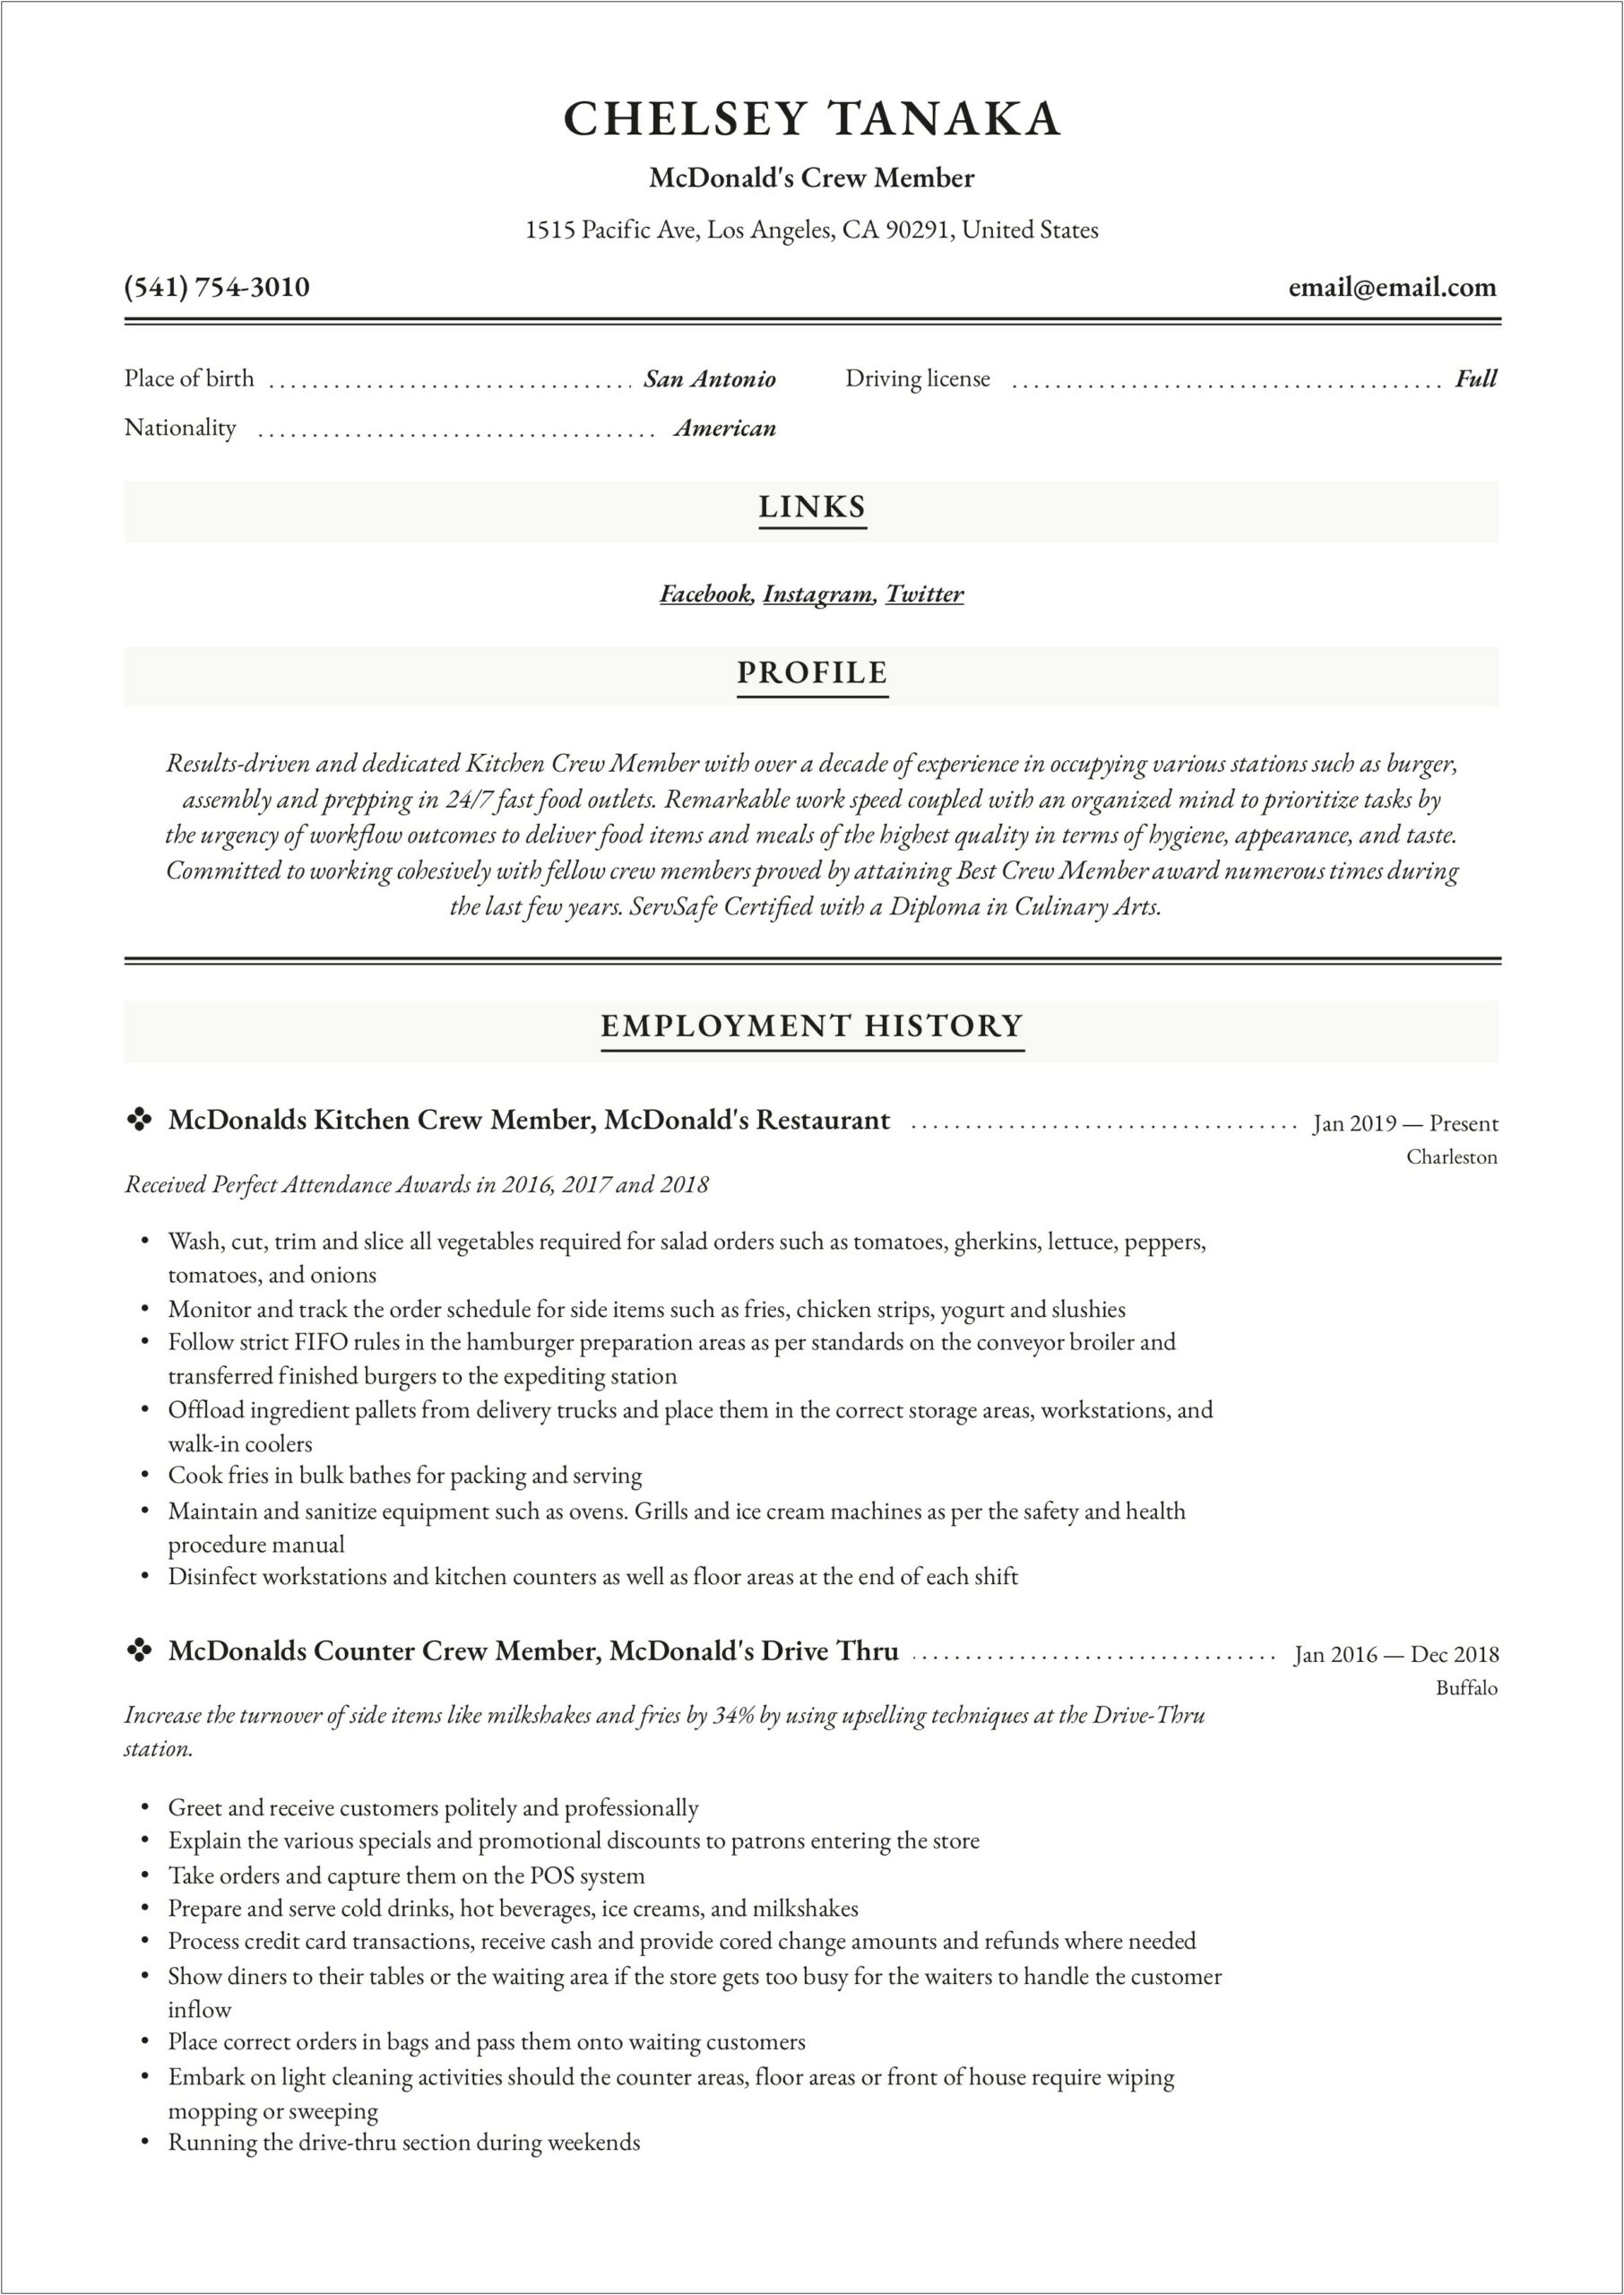 Mcdonald's Team Member Job Description For Resume